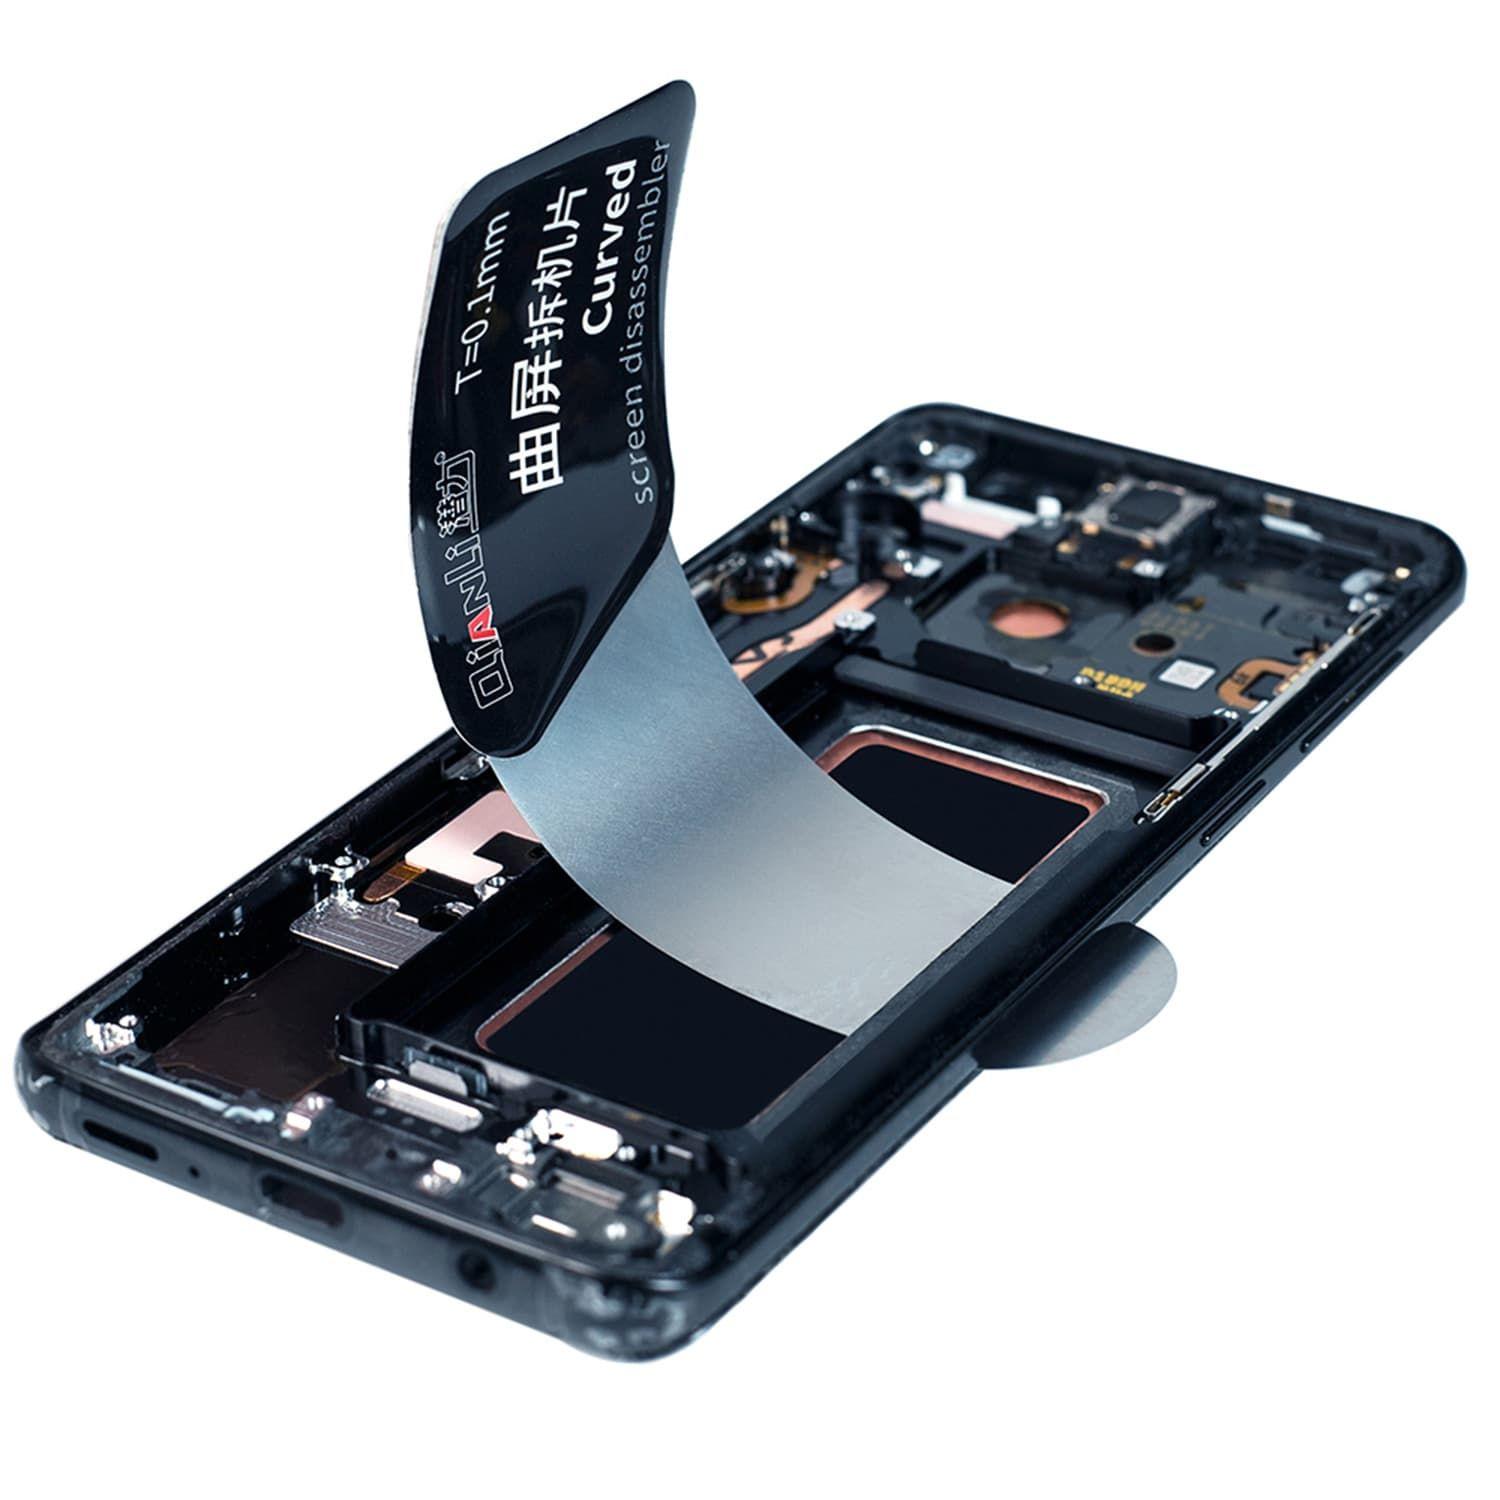 Precizní kovový otvírák na mobilní telefony QianLi ToolPlus - top kvalita - podzvedák